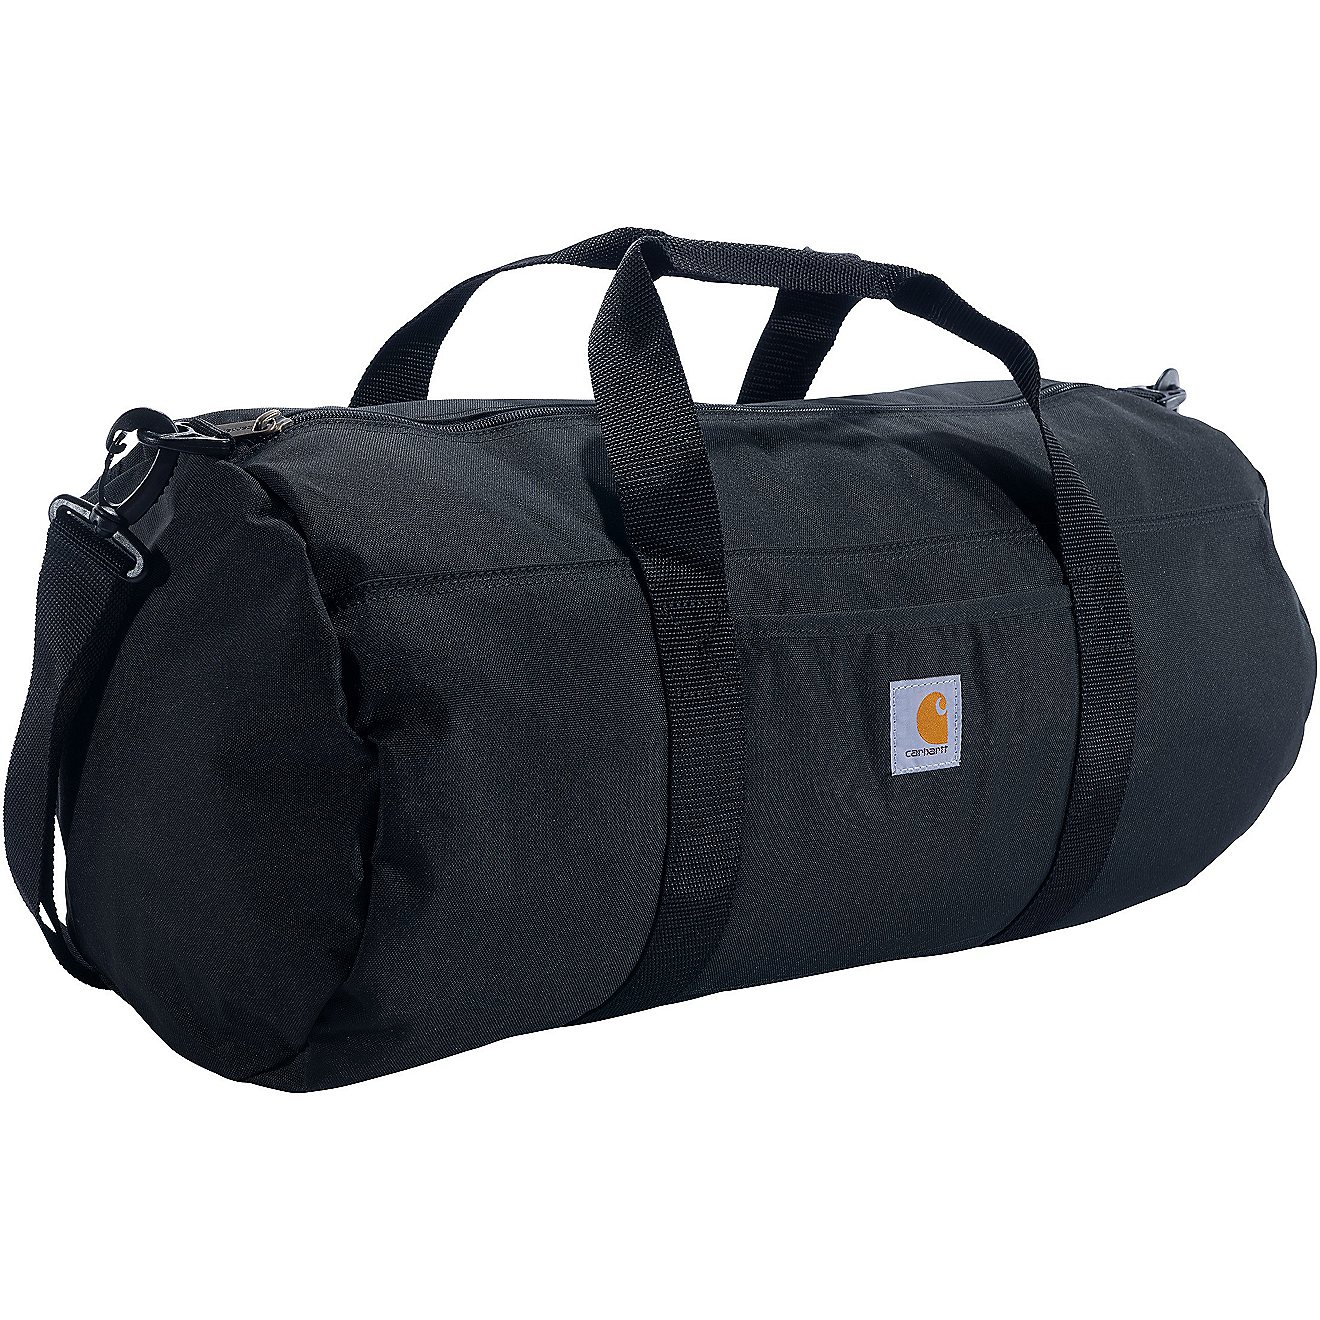 Carhartt Lightweight 40L Bag | Free Shipping at Academy